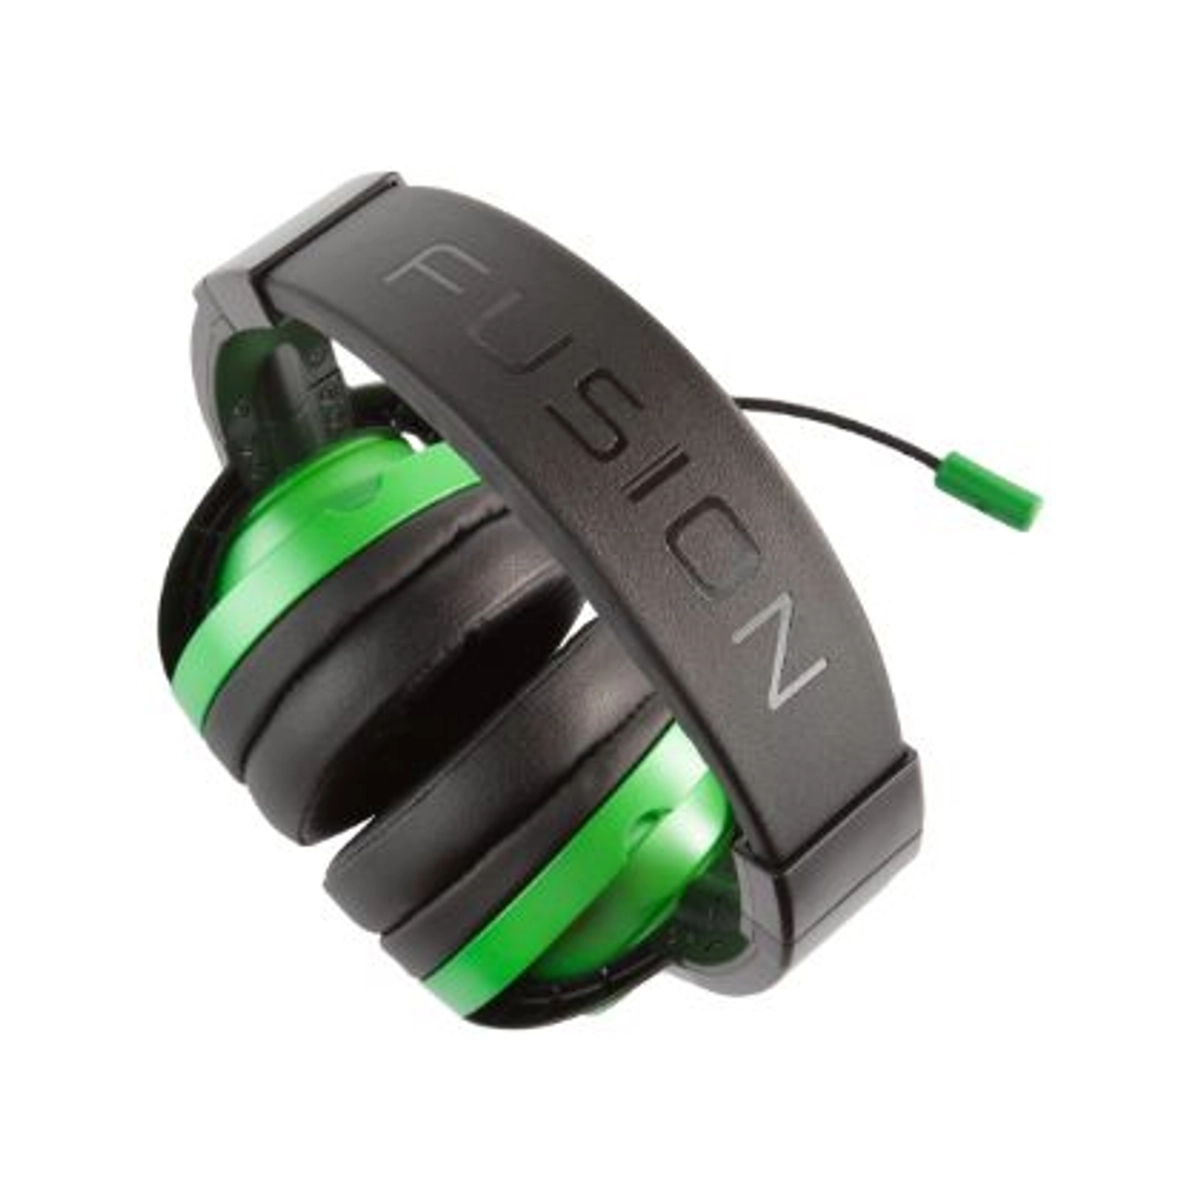 Fusion Universal Headset Emerald